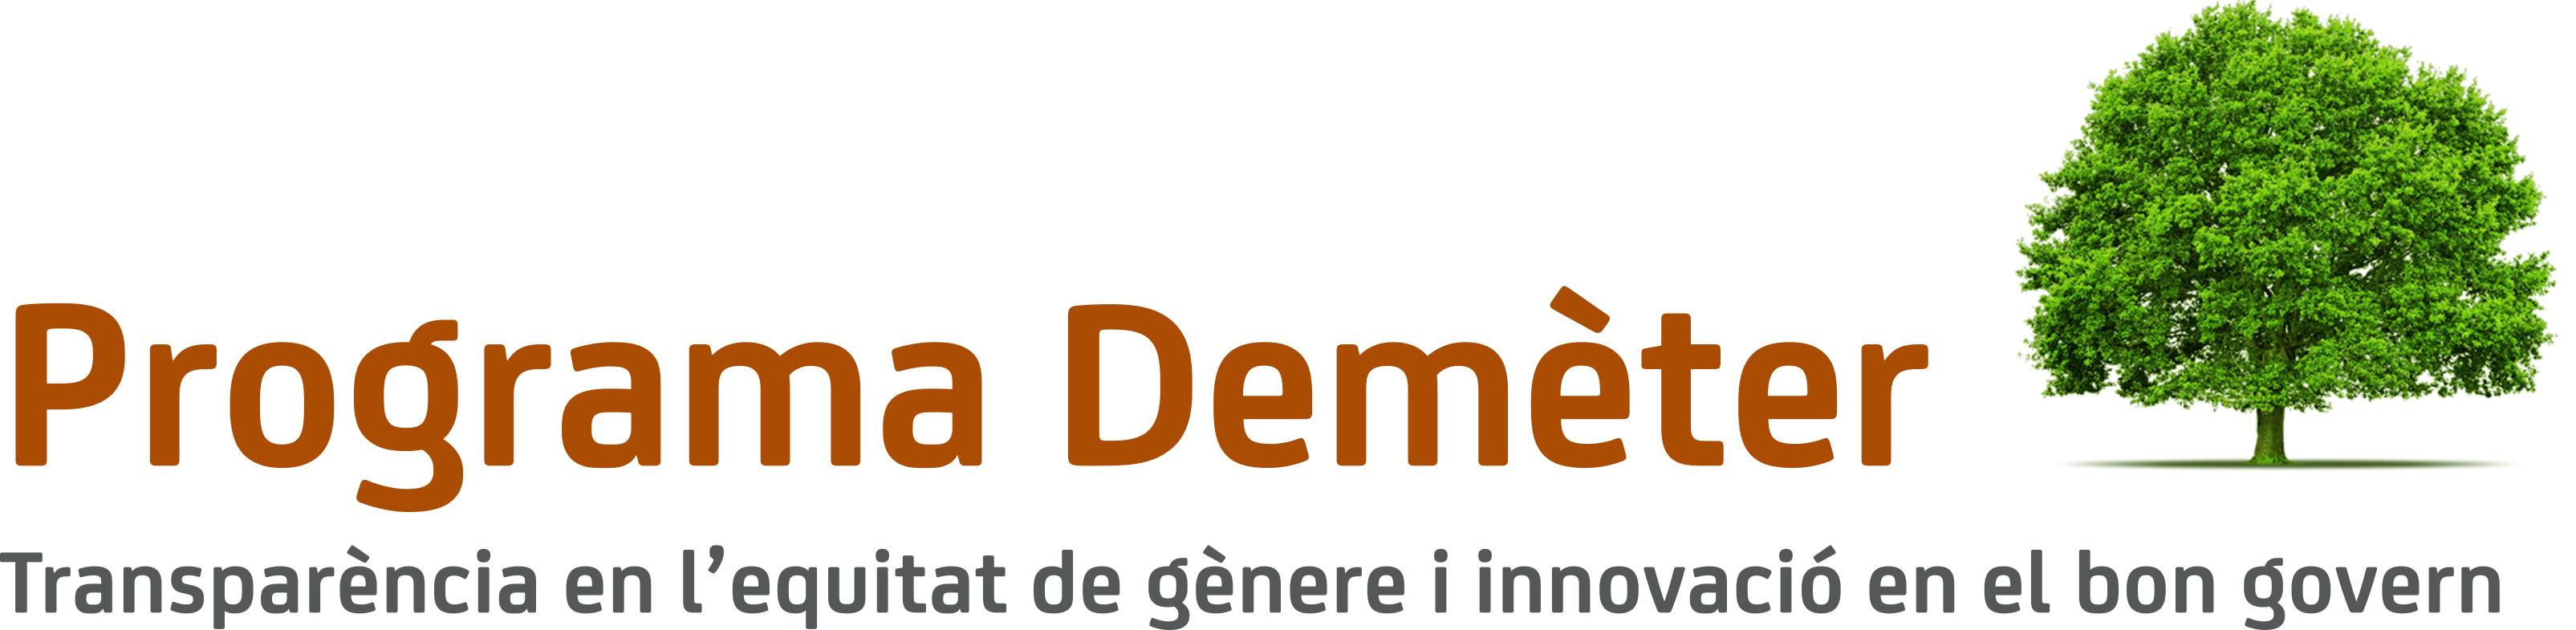 Demeter Programme